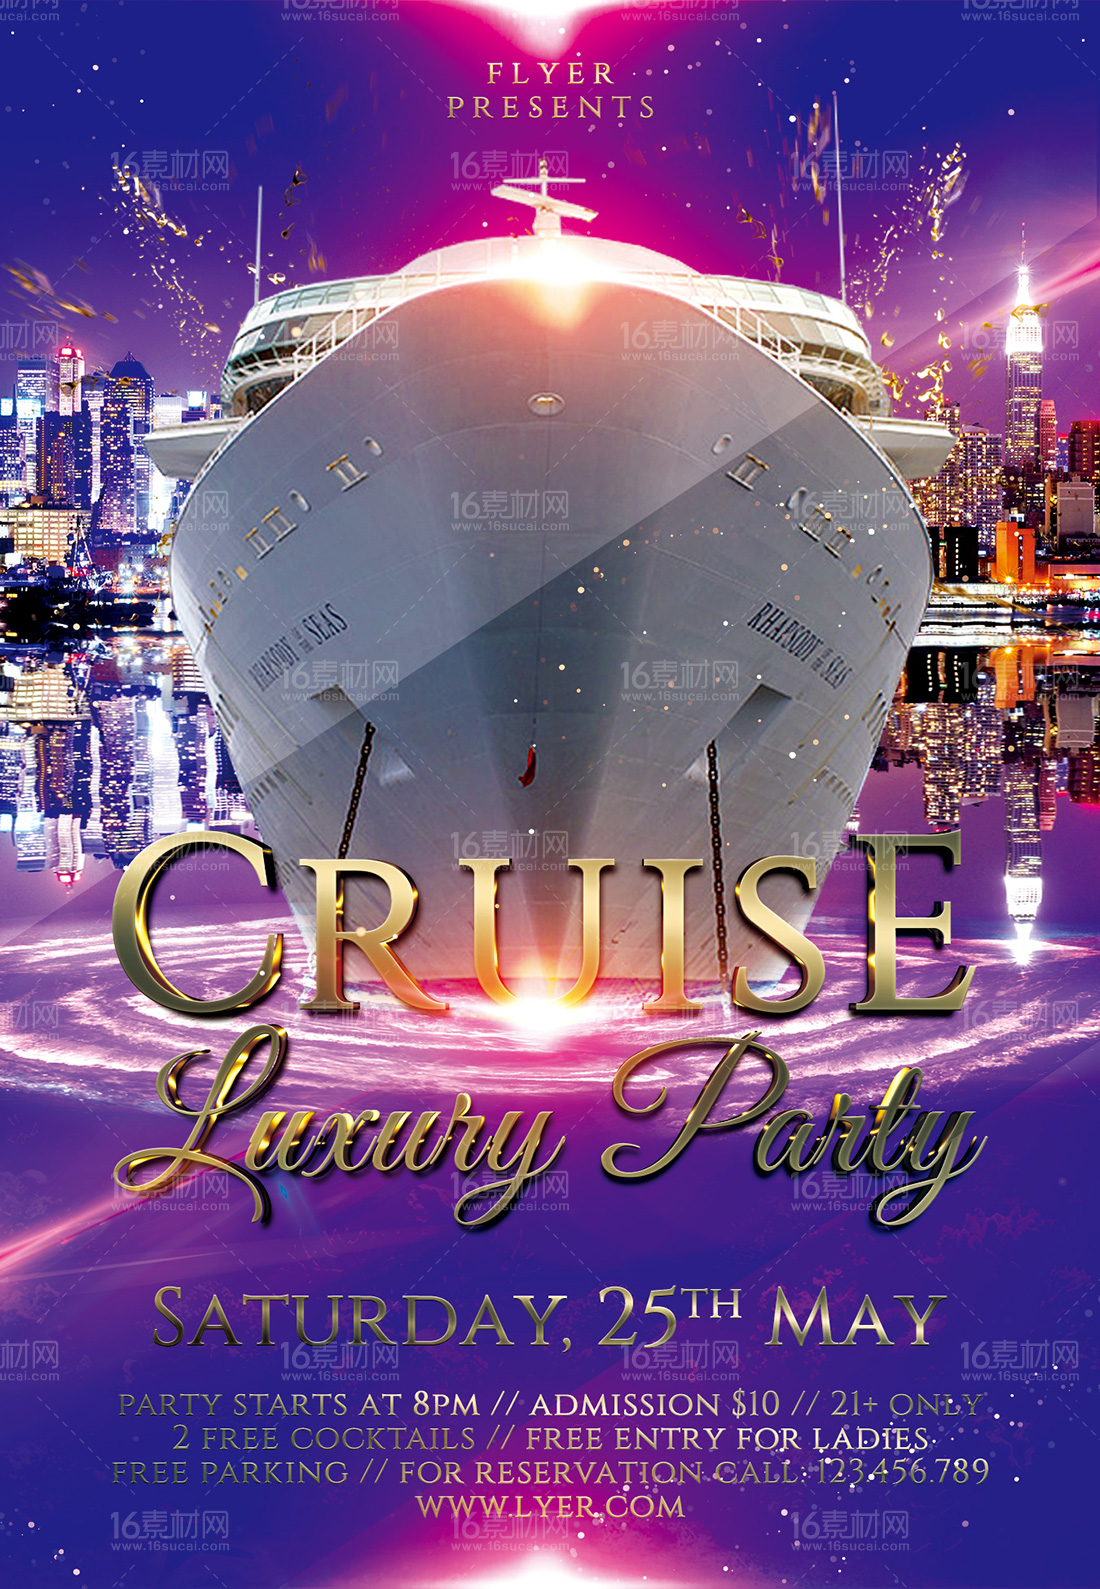 luxury_cruise_party.jpg